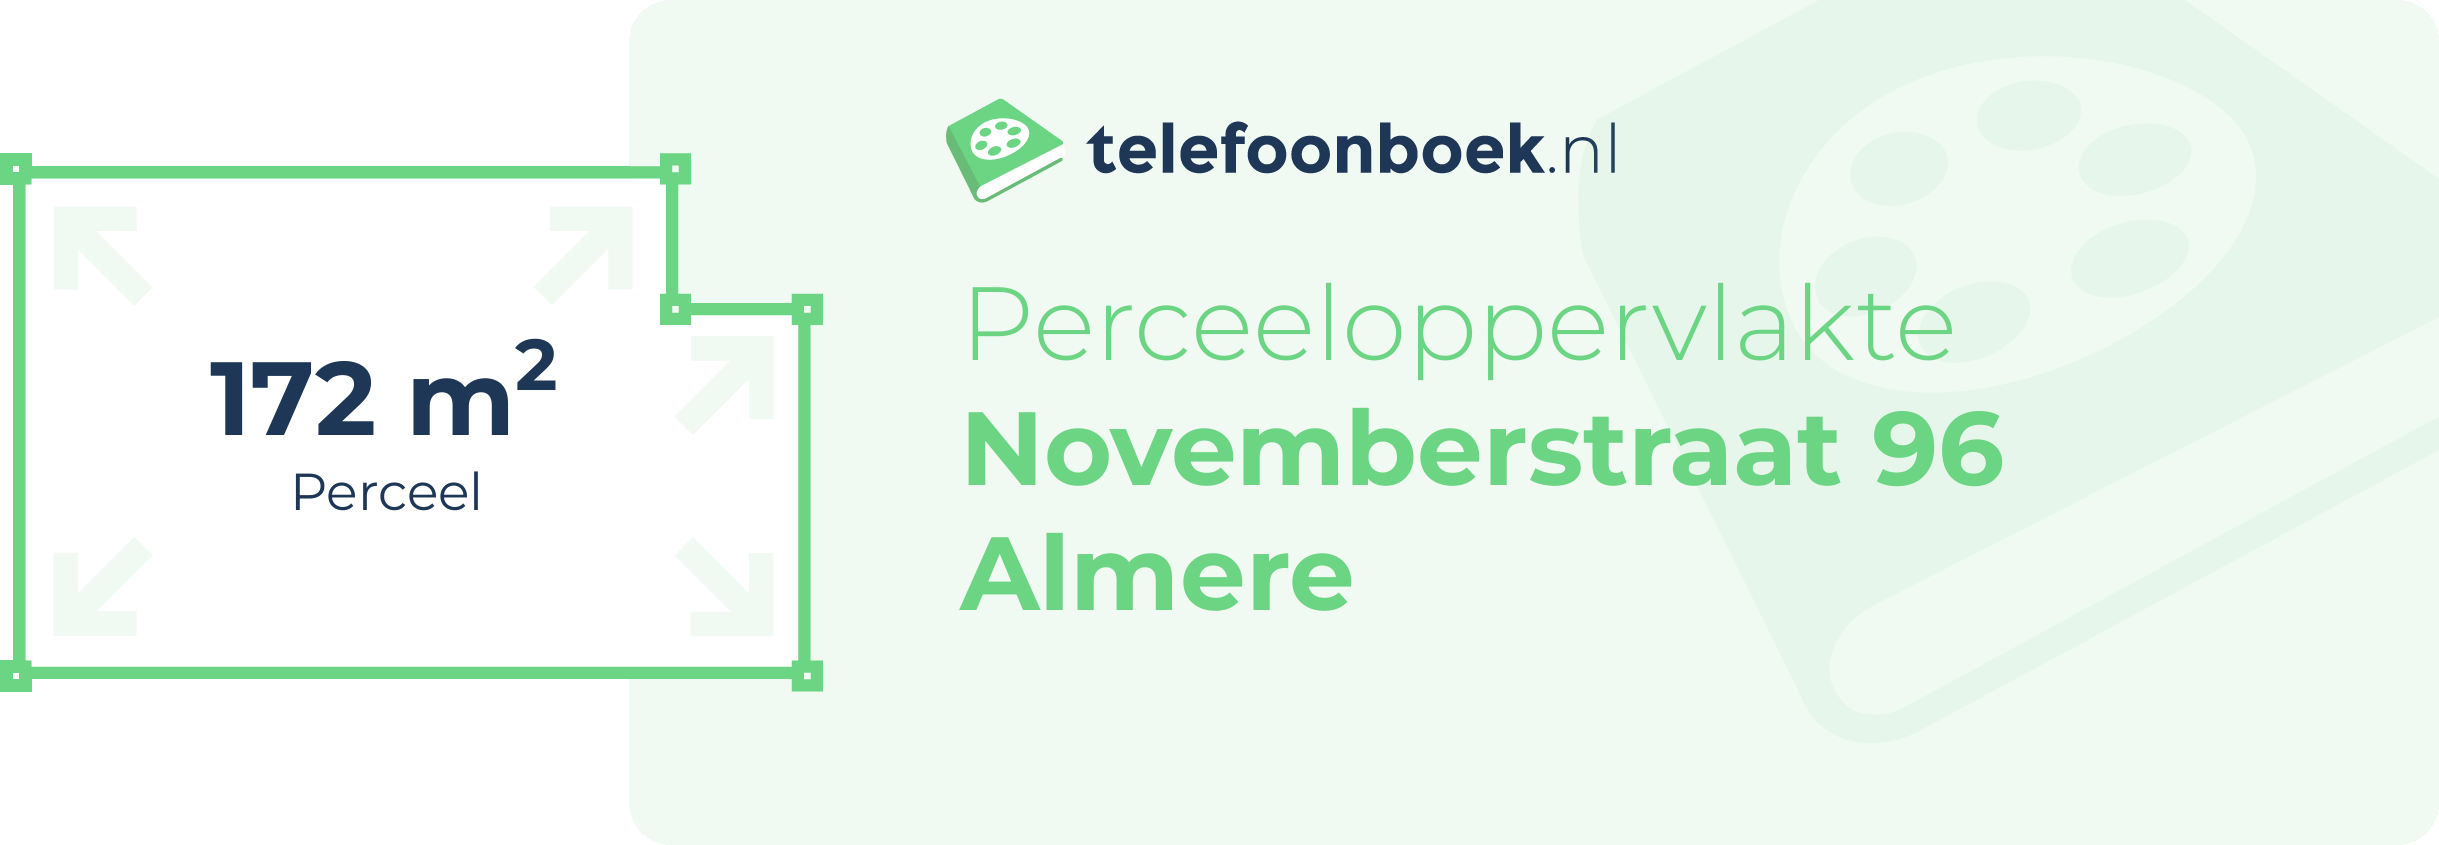 Perceeloppervlakte Novemberstraat 96 Almere